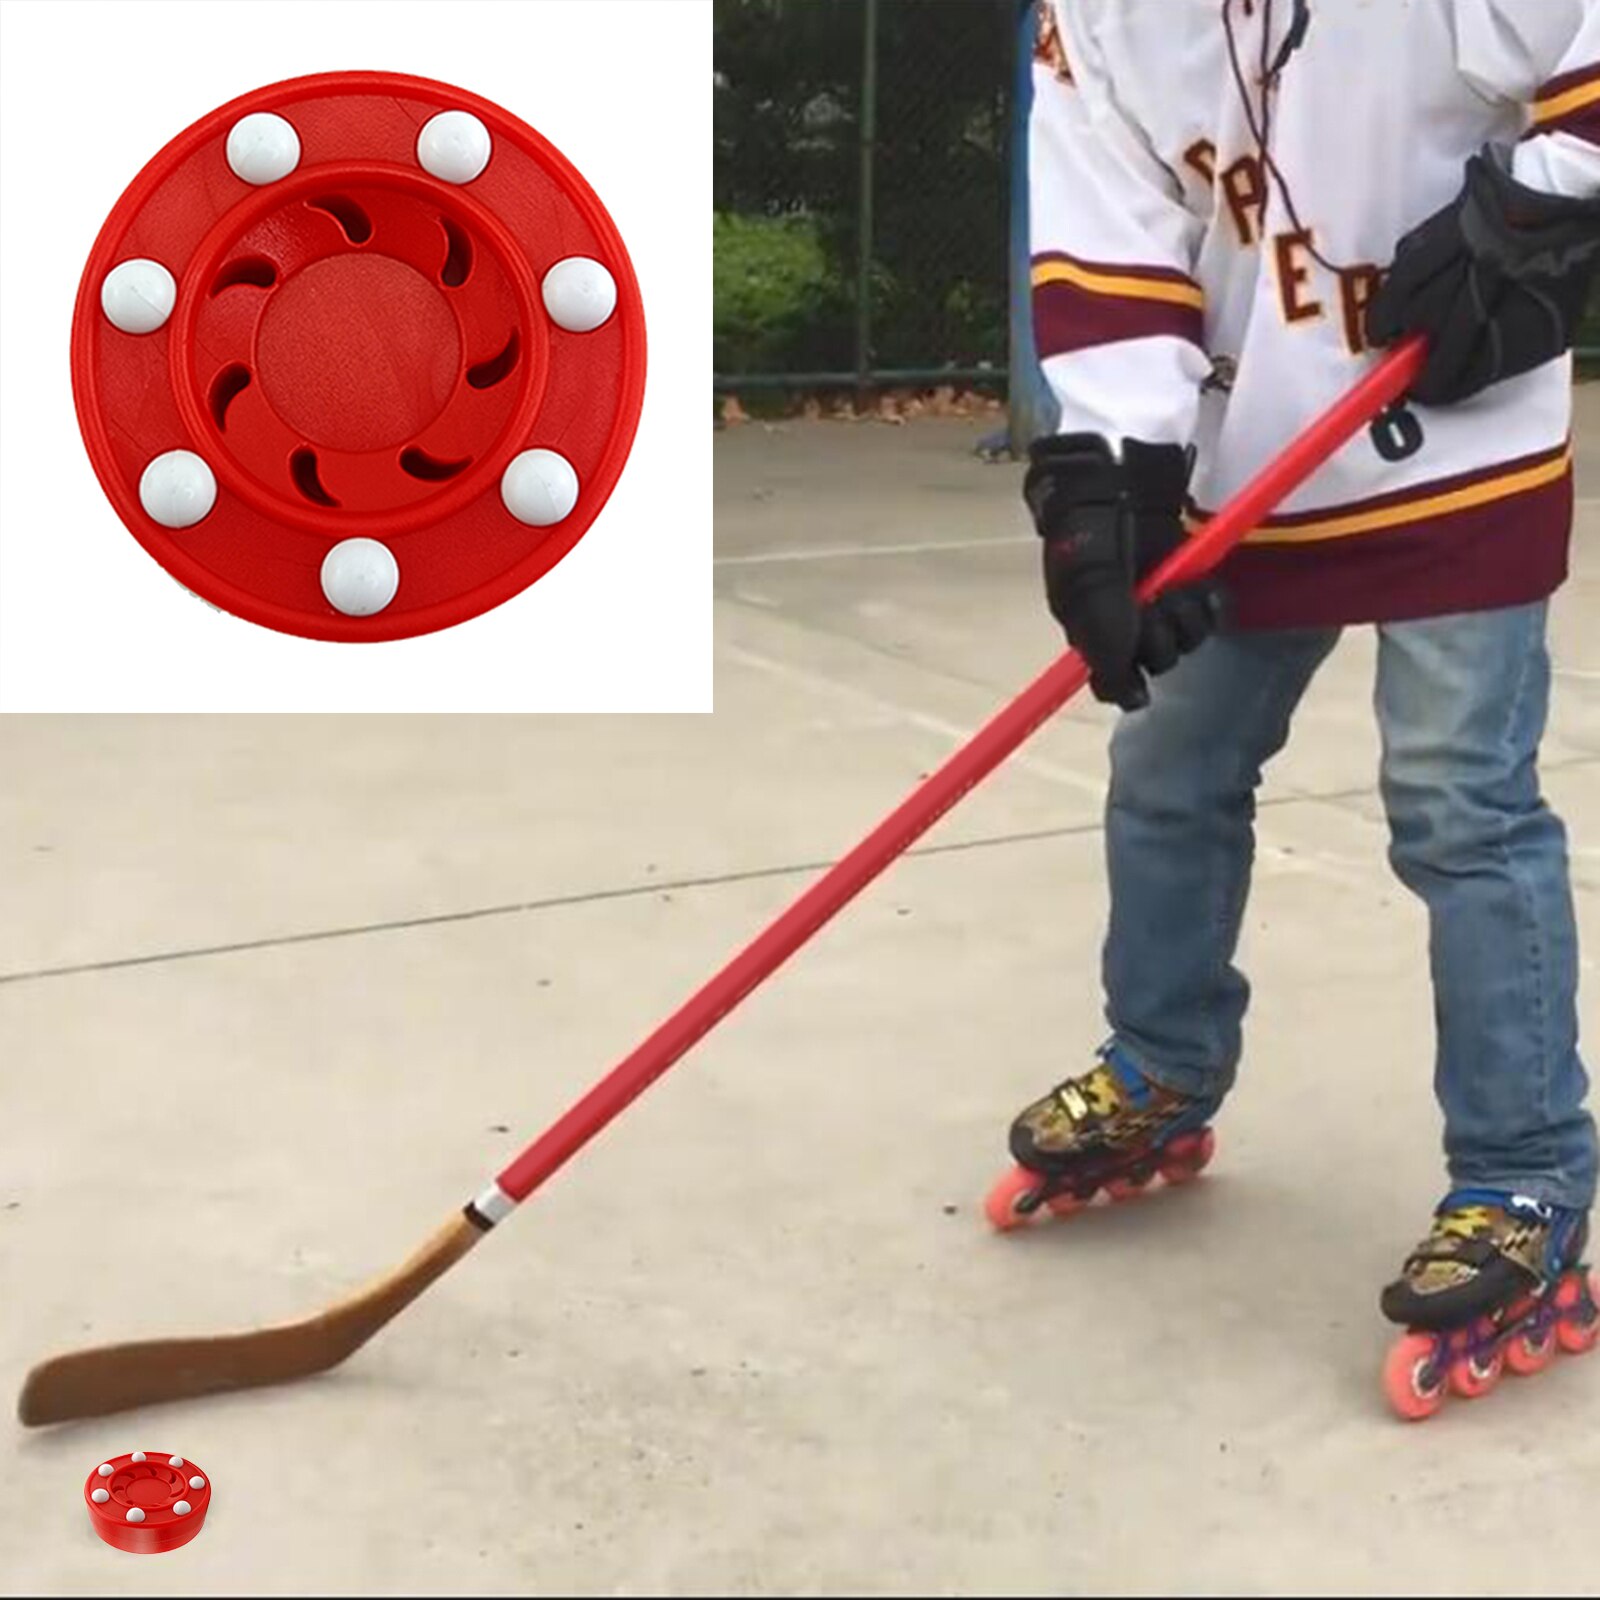 Premium Street Hockey Pucks Replacement, Roller Hockey Puck for better Shooting, Passing, Stick handling, Quad Hockey Puck Ball